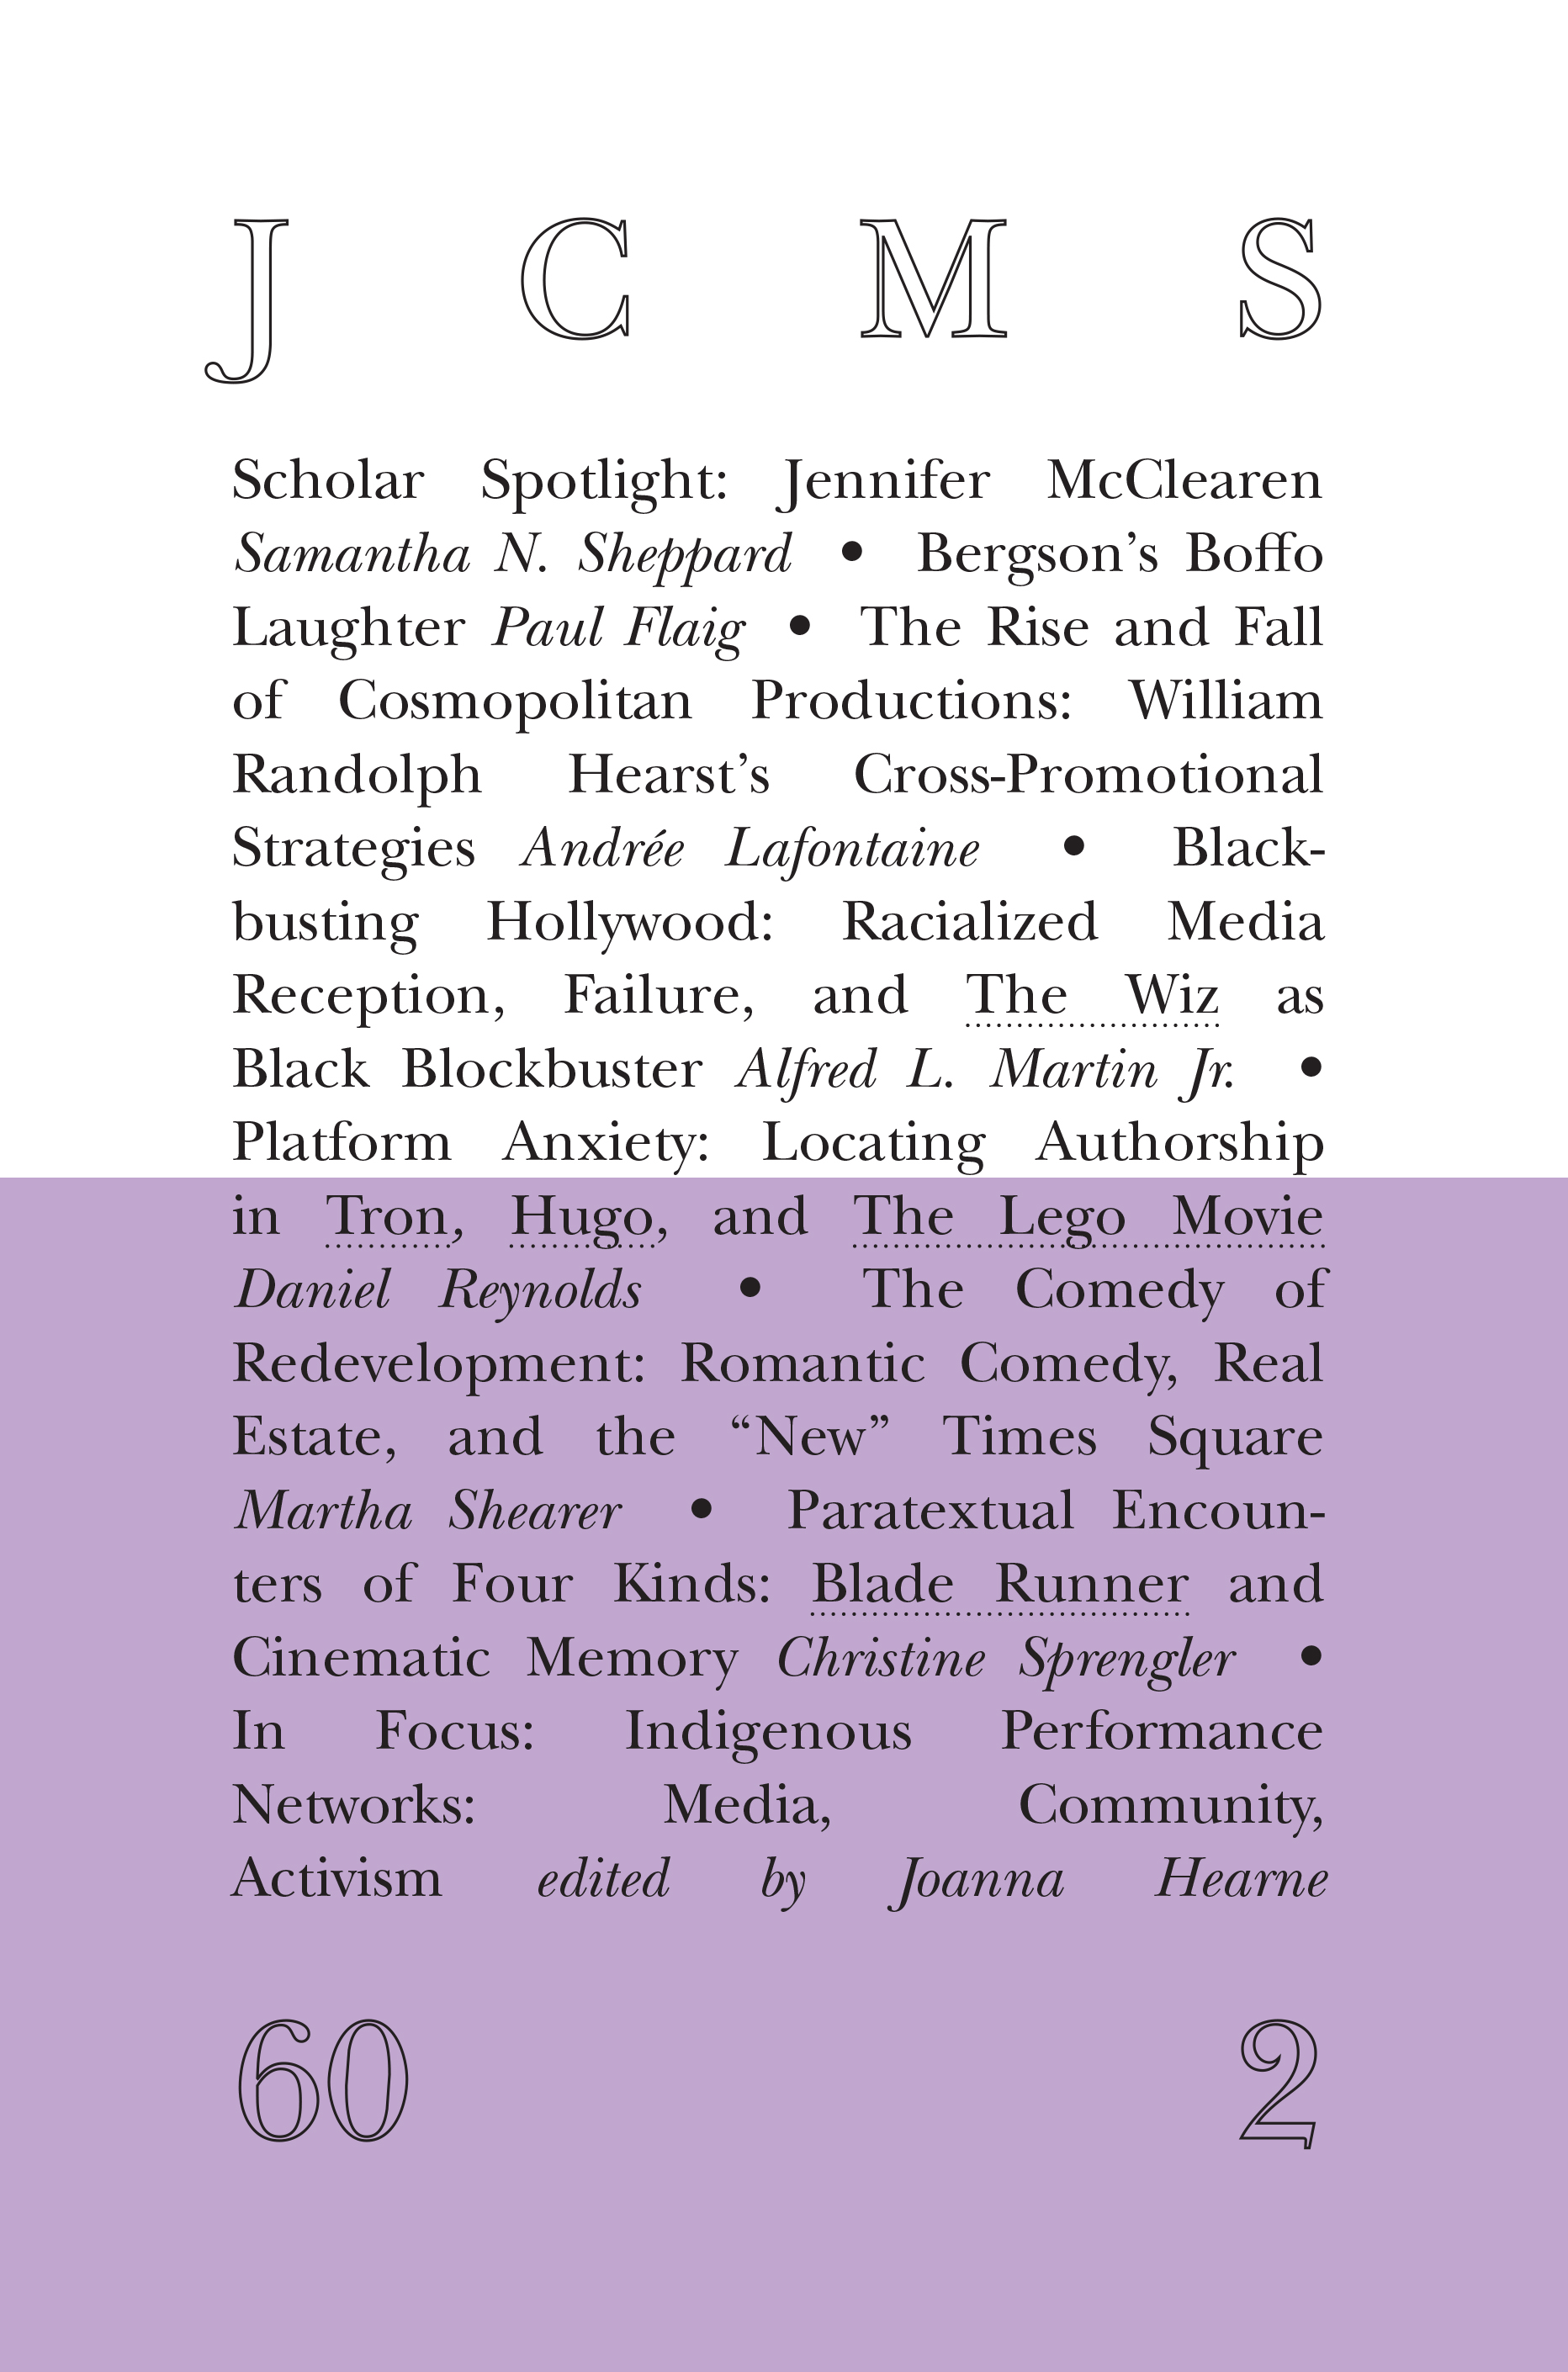 Journal of Cinema and Media Studies, vol. 60, no. 2